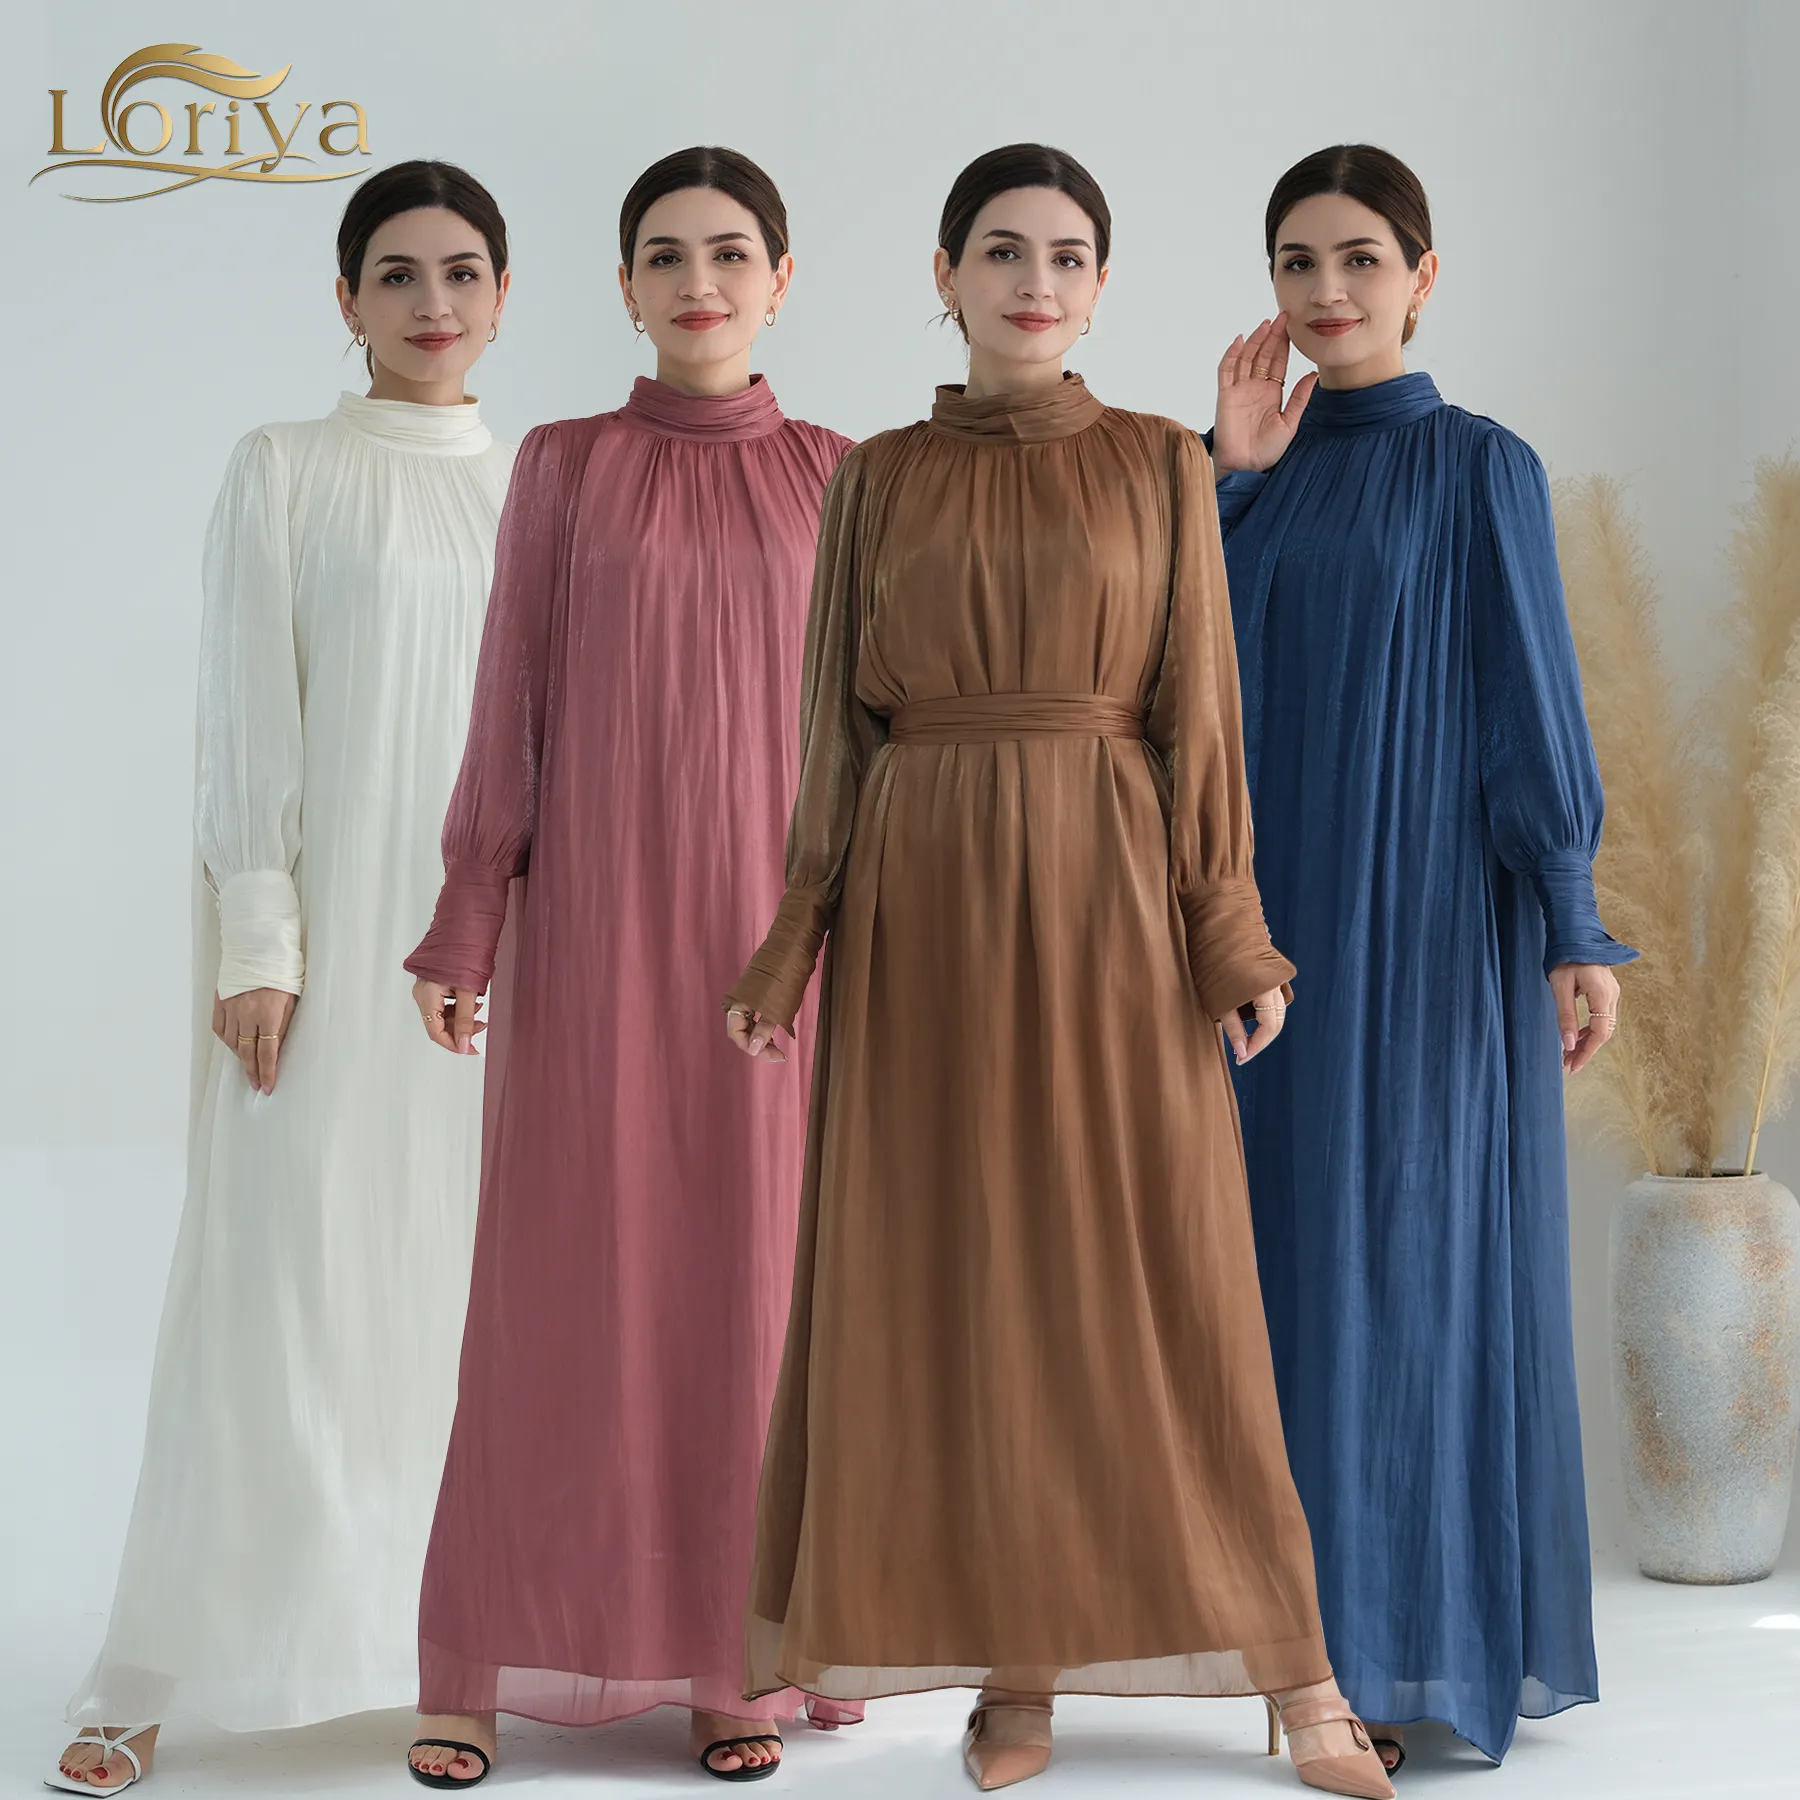 Loriya Abaya 2024 vêtements islamiques robes modestes pour femmes brillant Polyester tenue décontracté Abaya femmes robe musulmane avec doublure